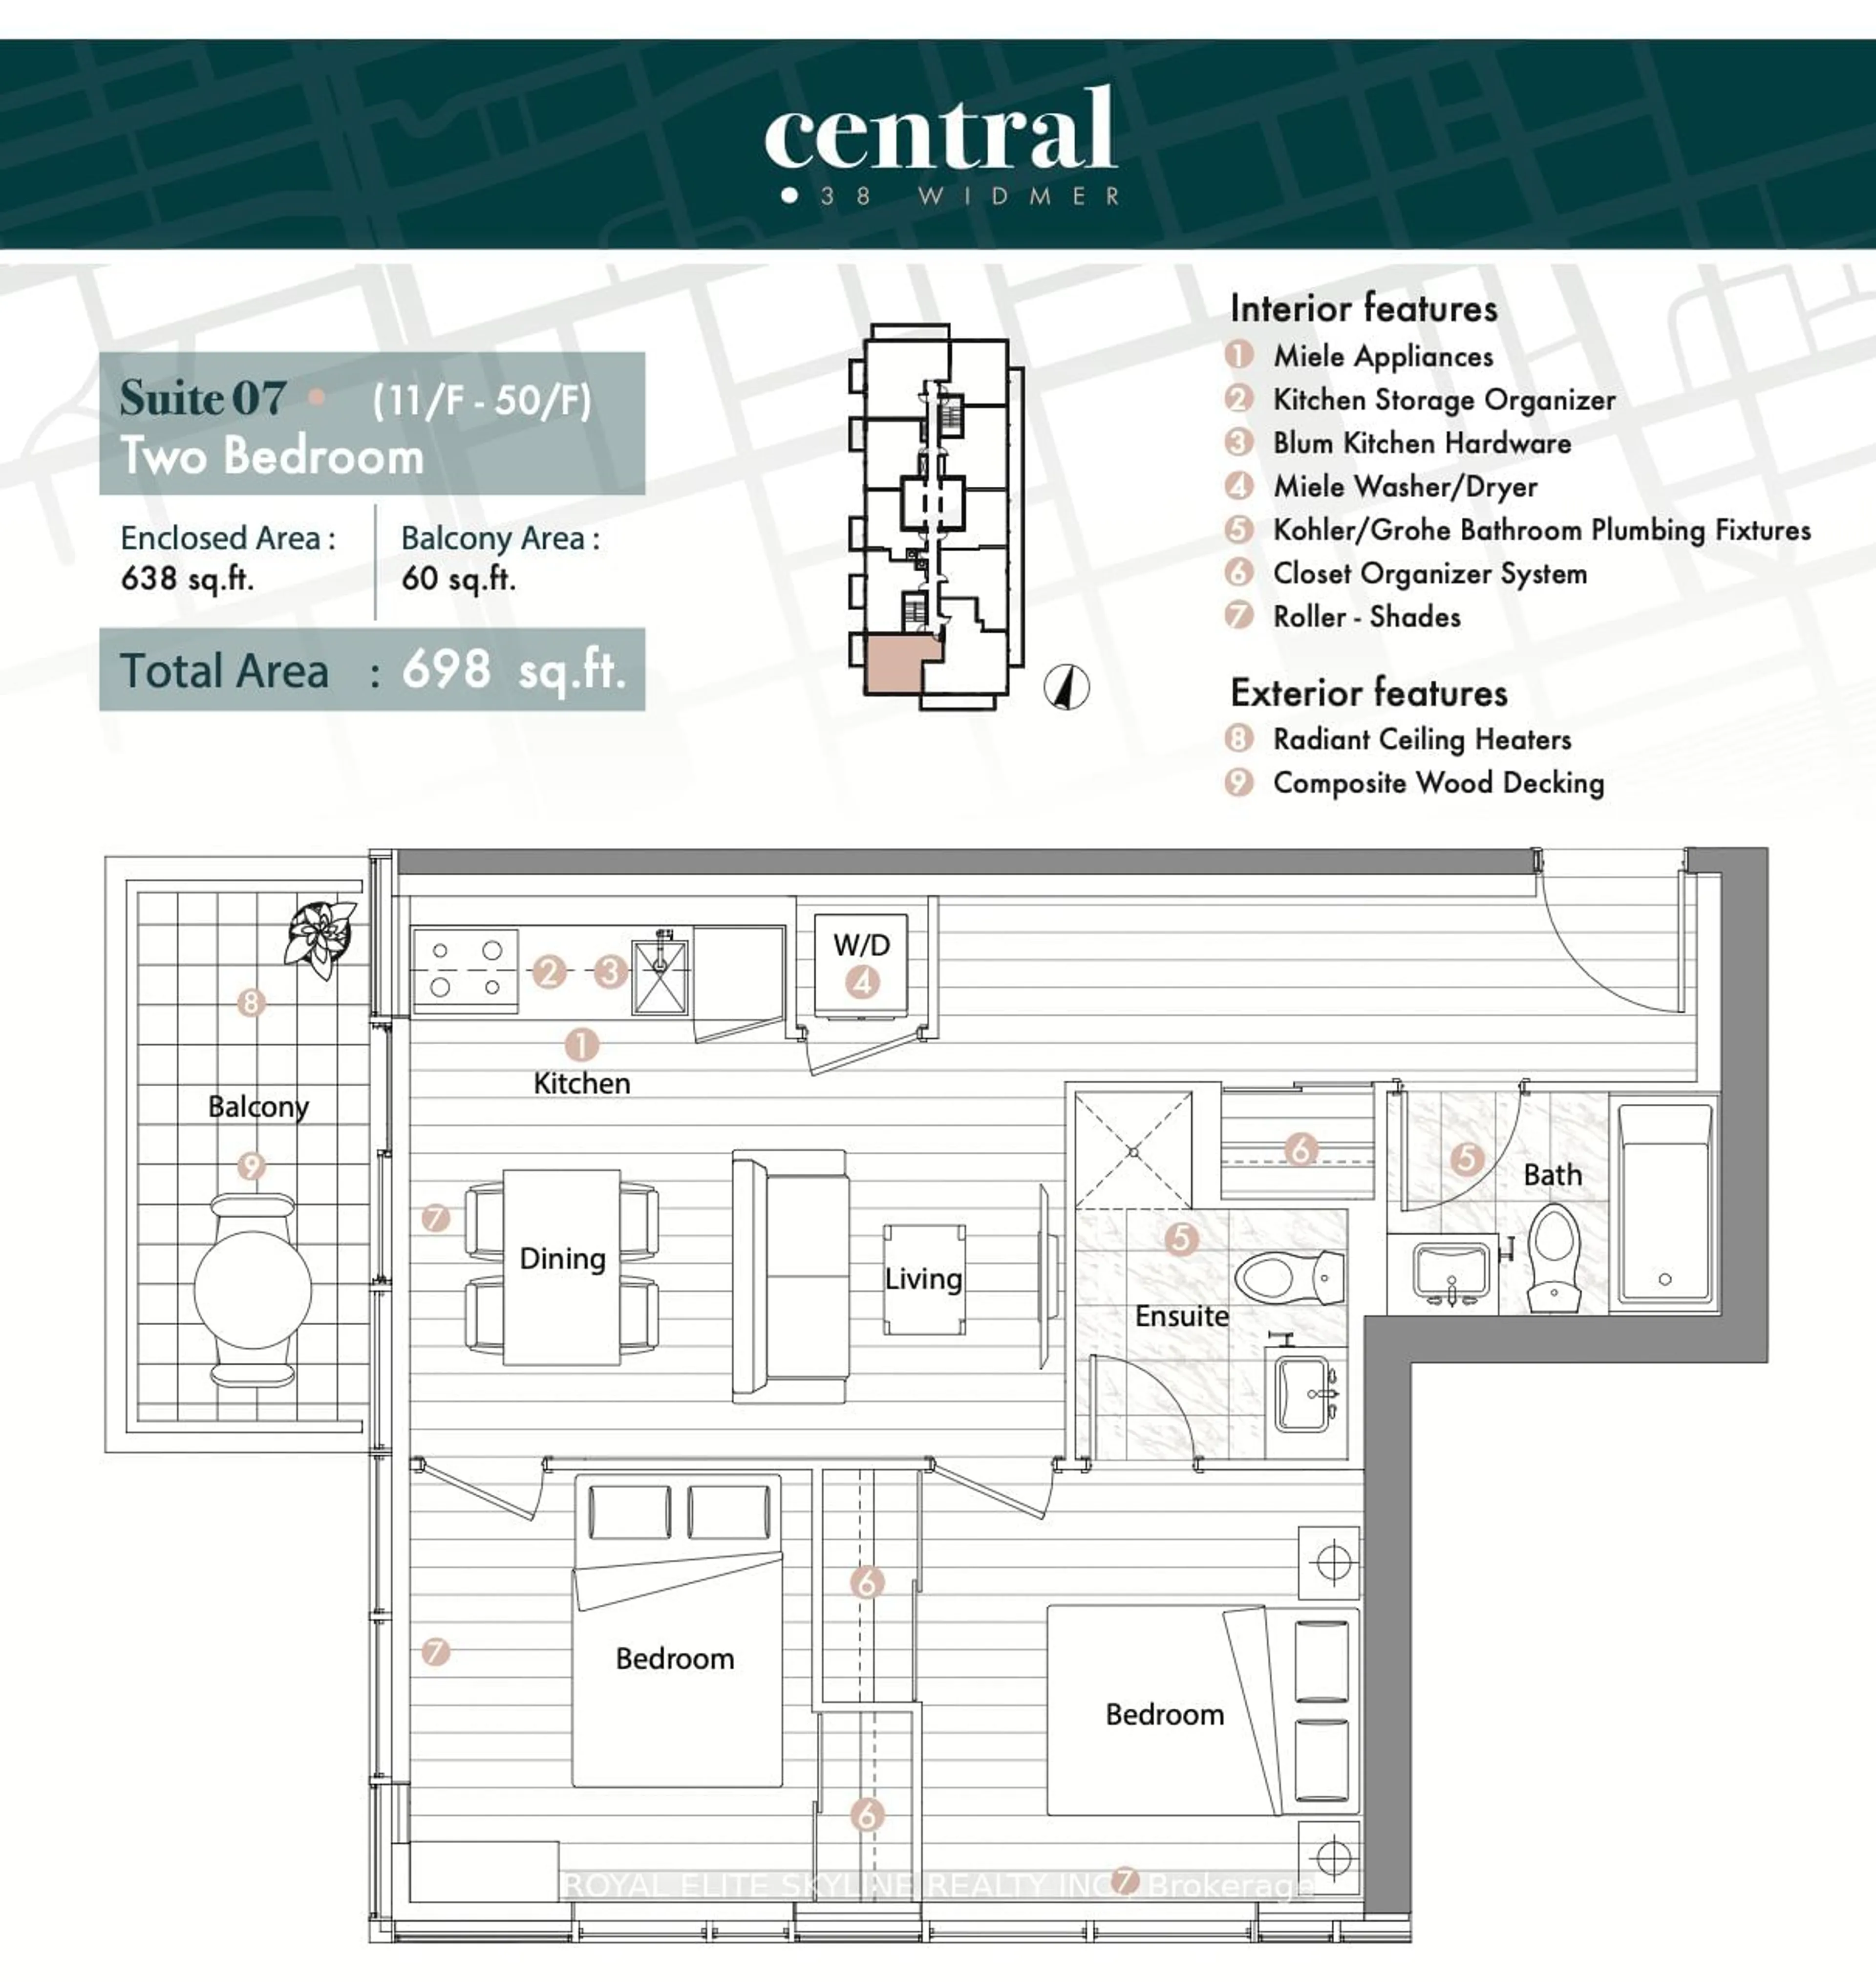 Floor plan for 38 Widmer St #4907, Toronto Ontario M5V 0P7